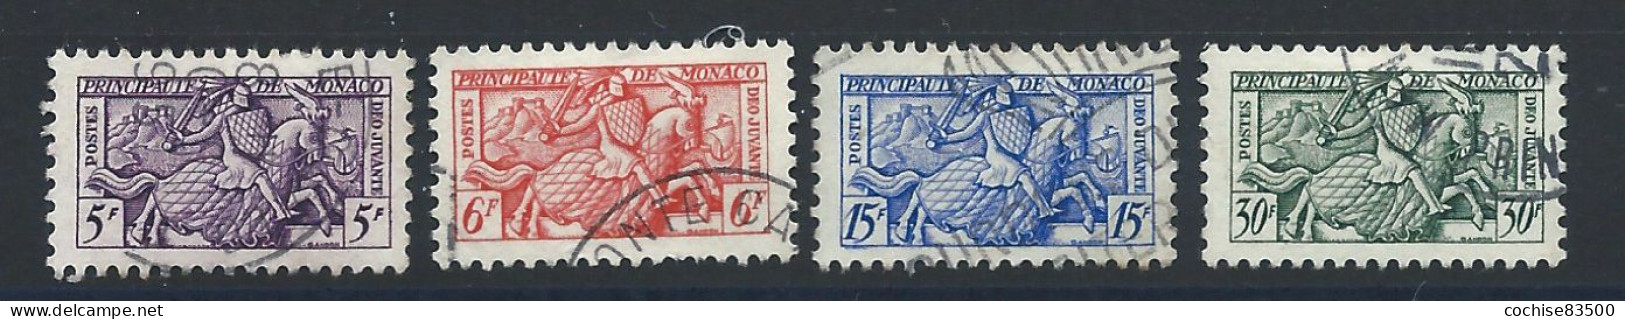 Monaco N°415/16 + 418/19 Obl (FU) 1955 - Sceau Du Prince - Used Stamps